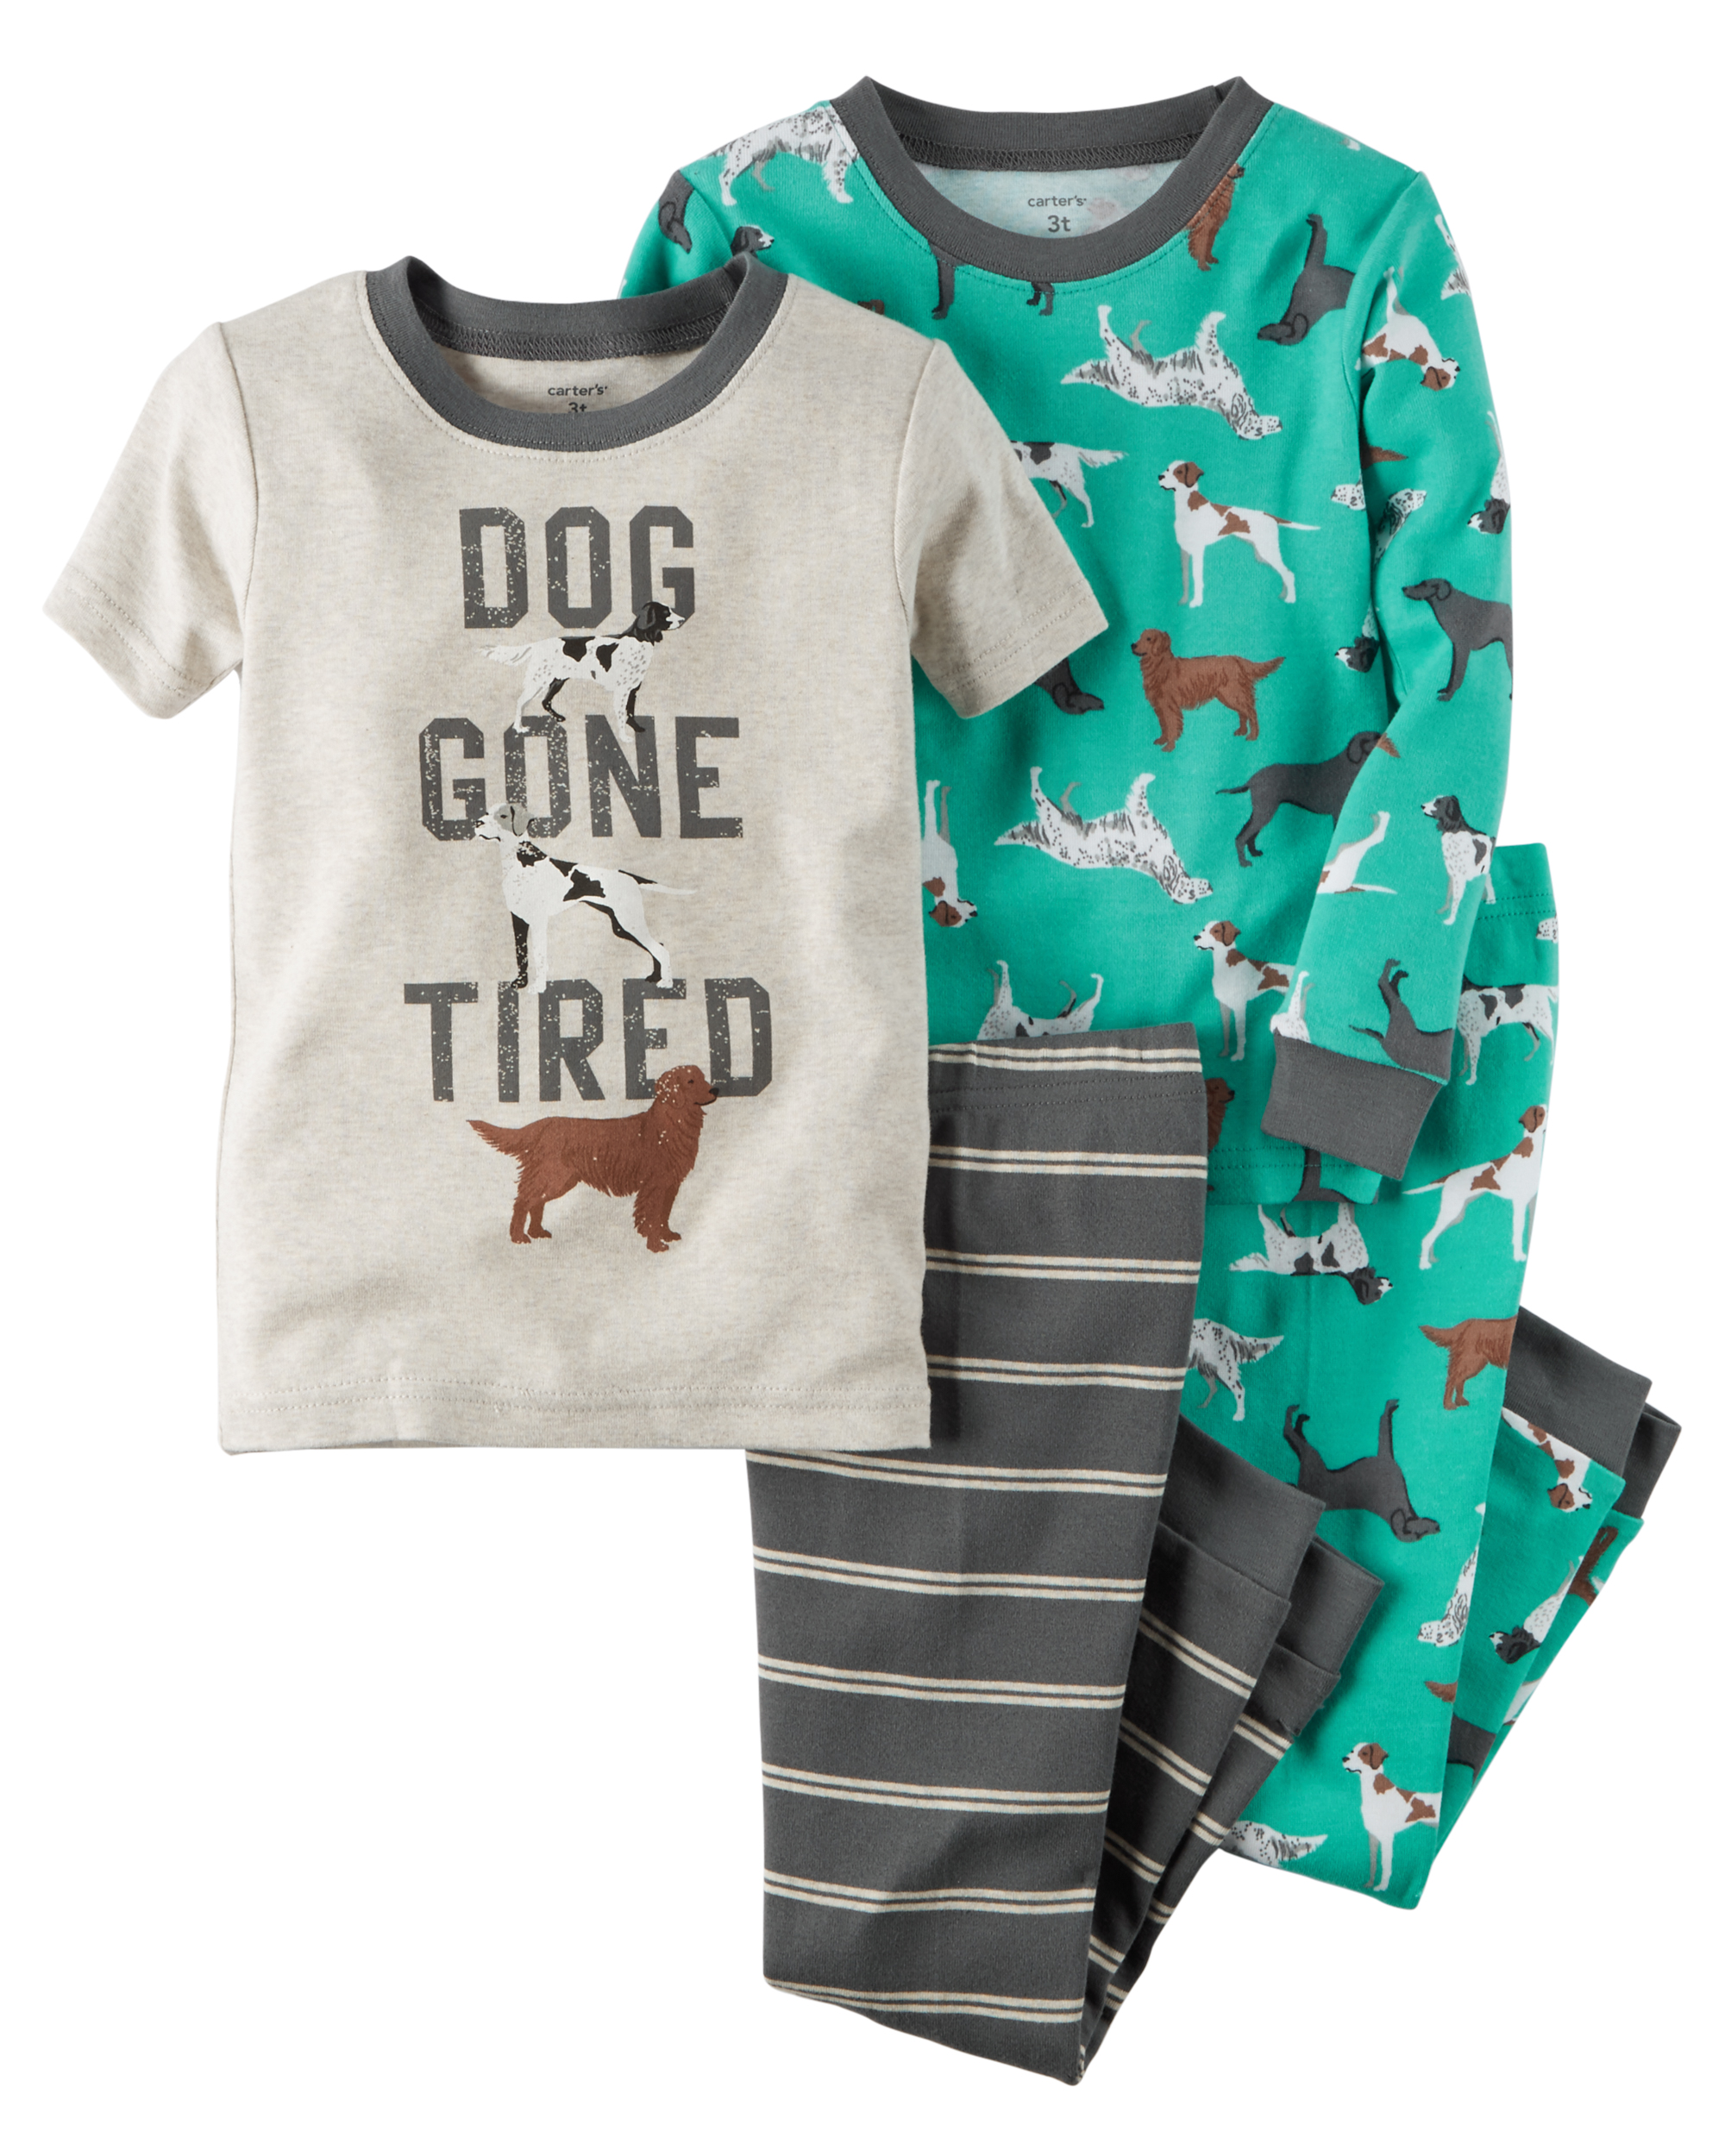 Carter's Infant & Toddler Boys' 4-Pc. Pajama Set - Dog